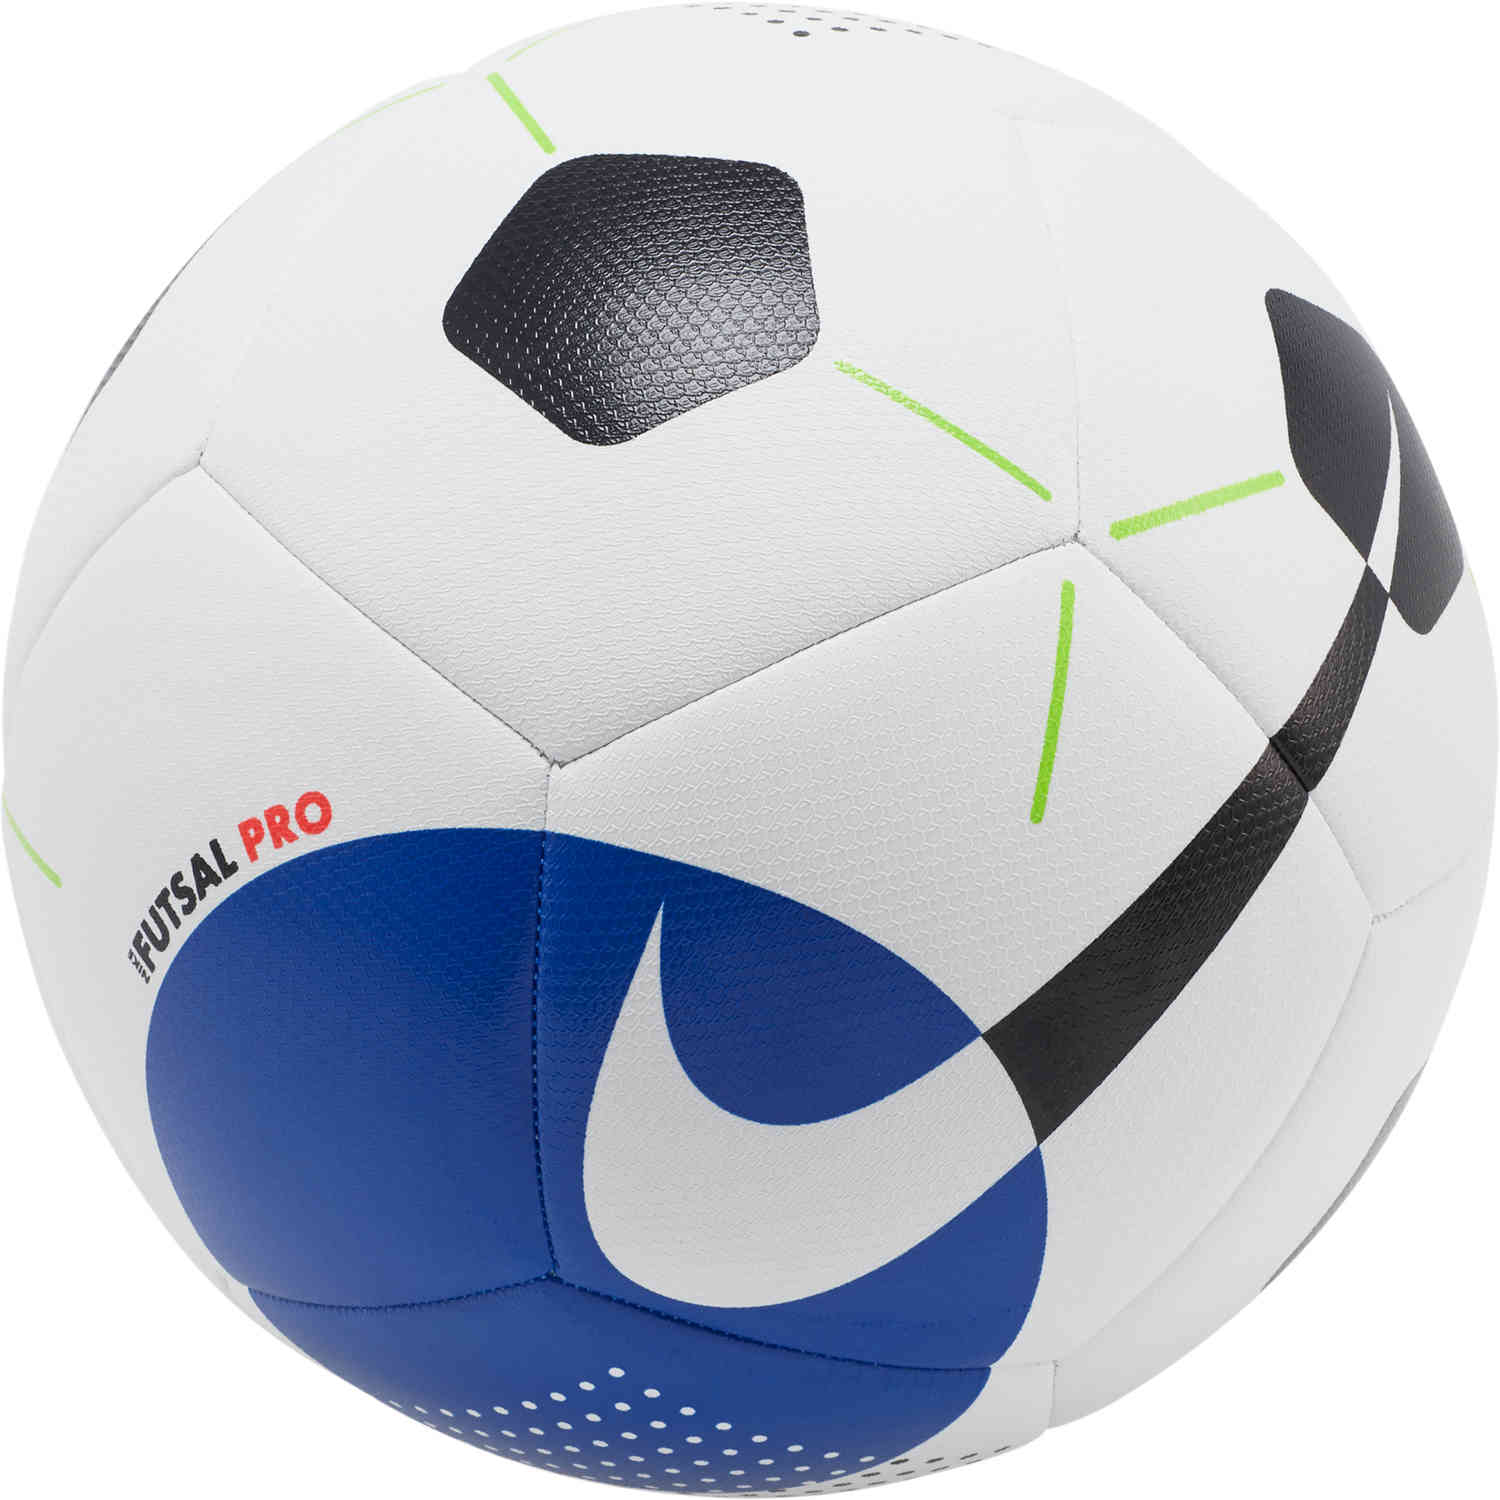 Nike Pro Futsal Ball - White/Racer Blue 